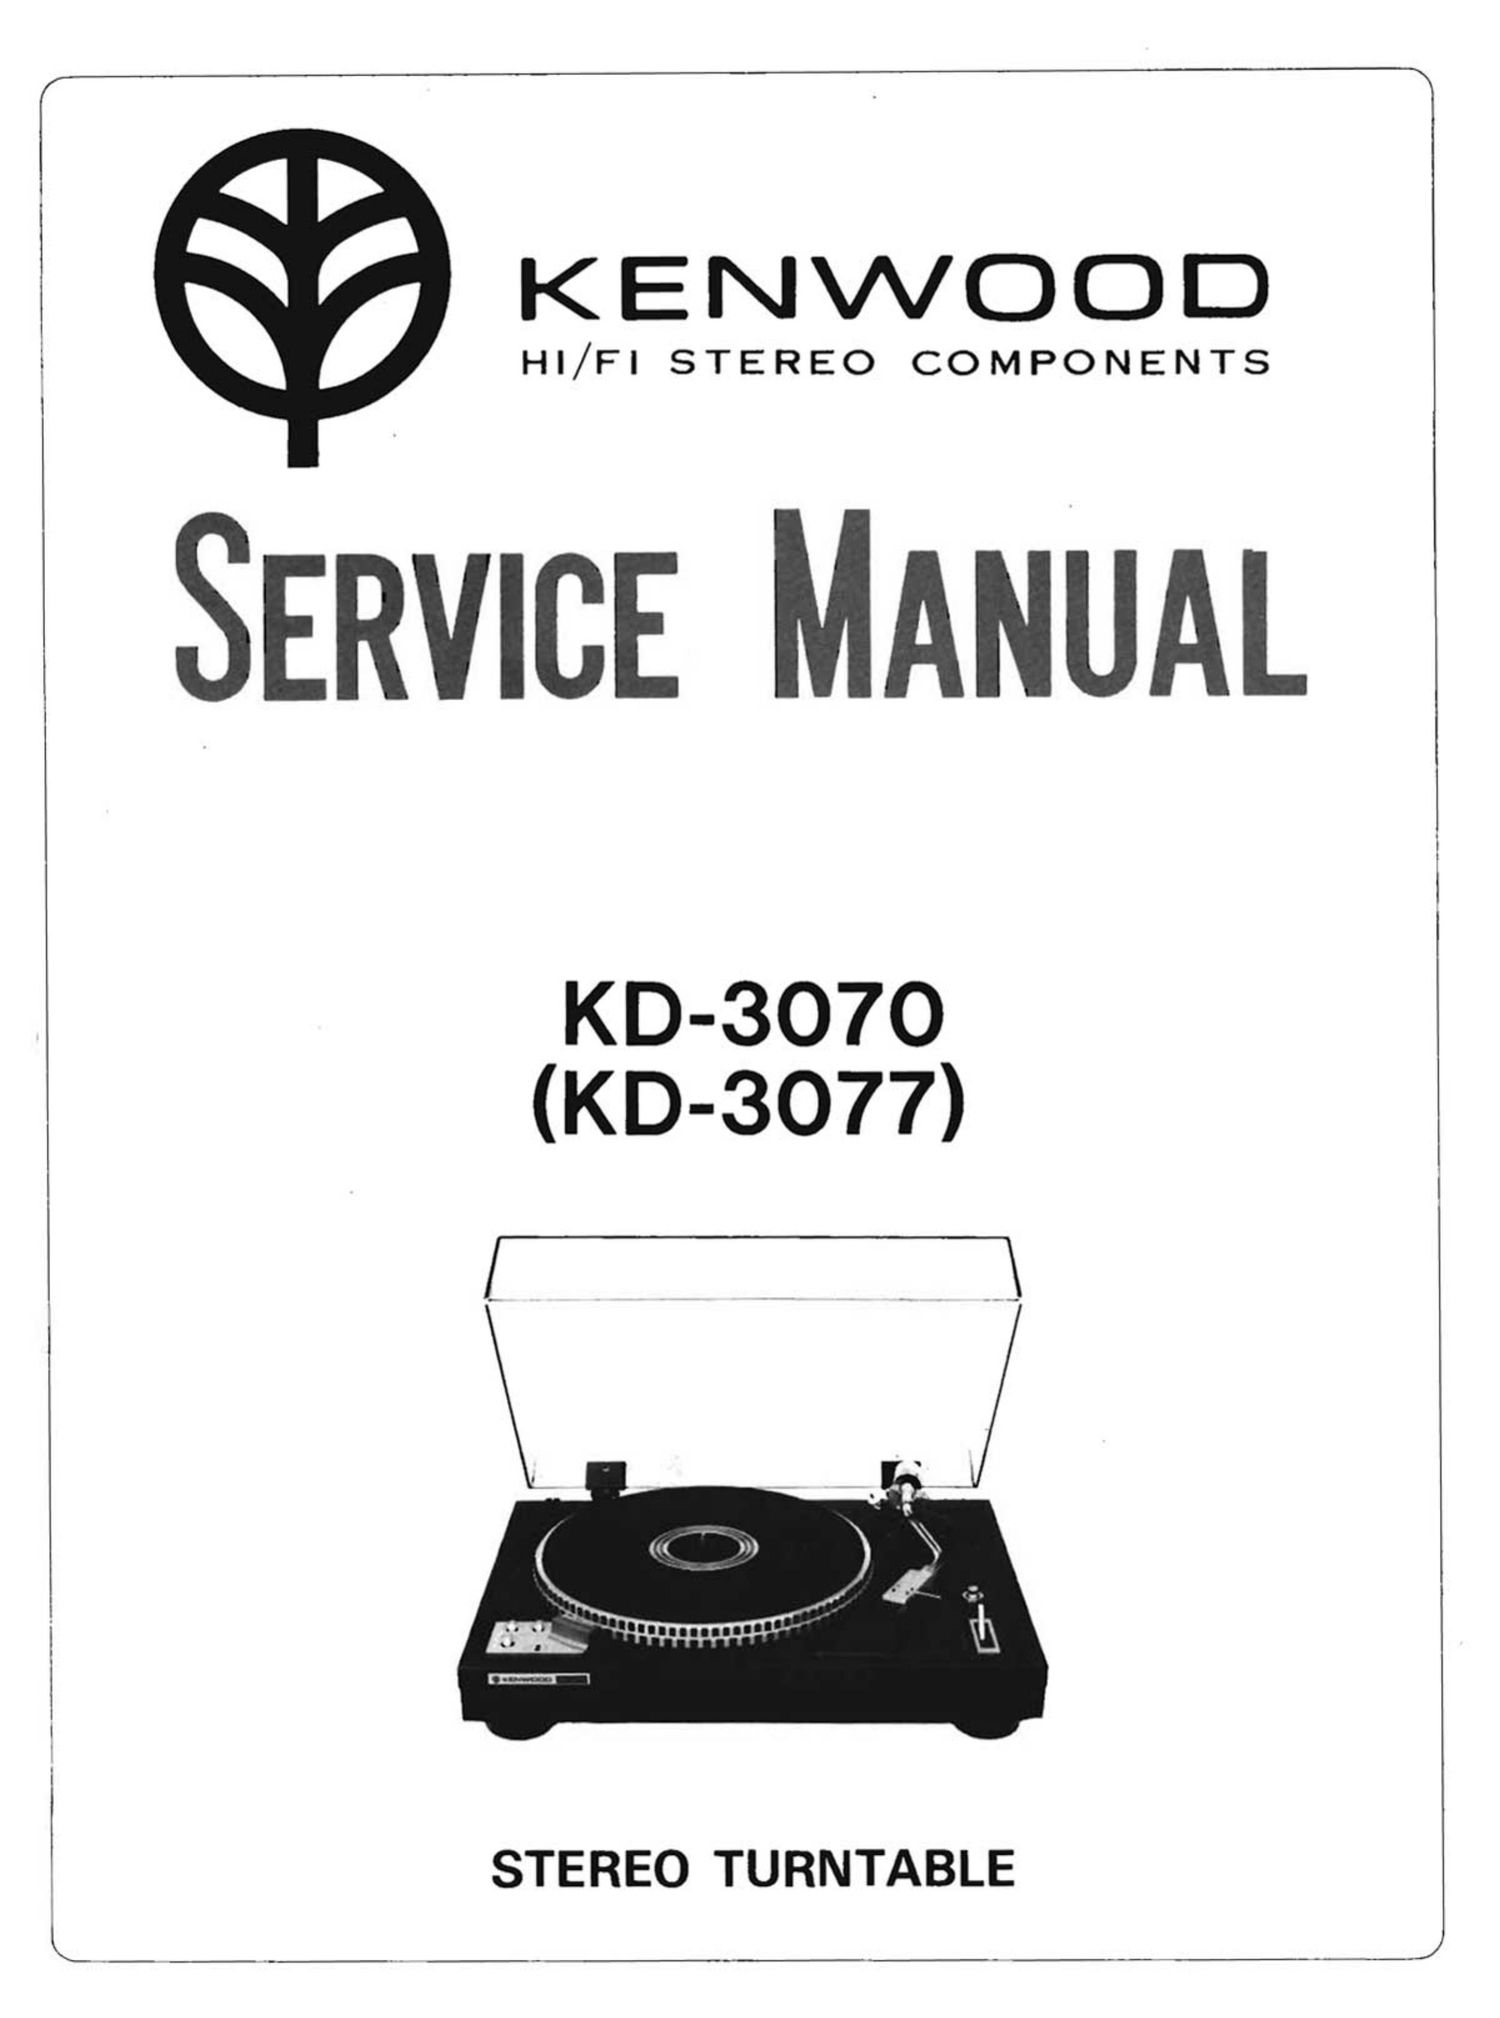 Kenwood D 3070 KD 3077 Service Manual (1)